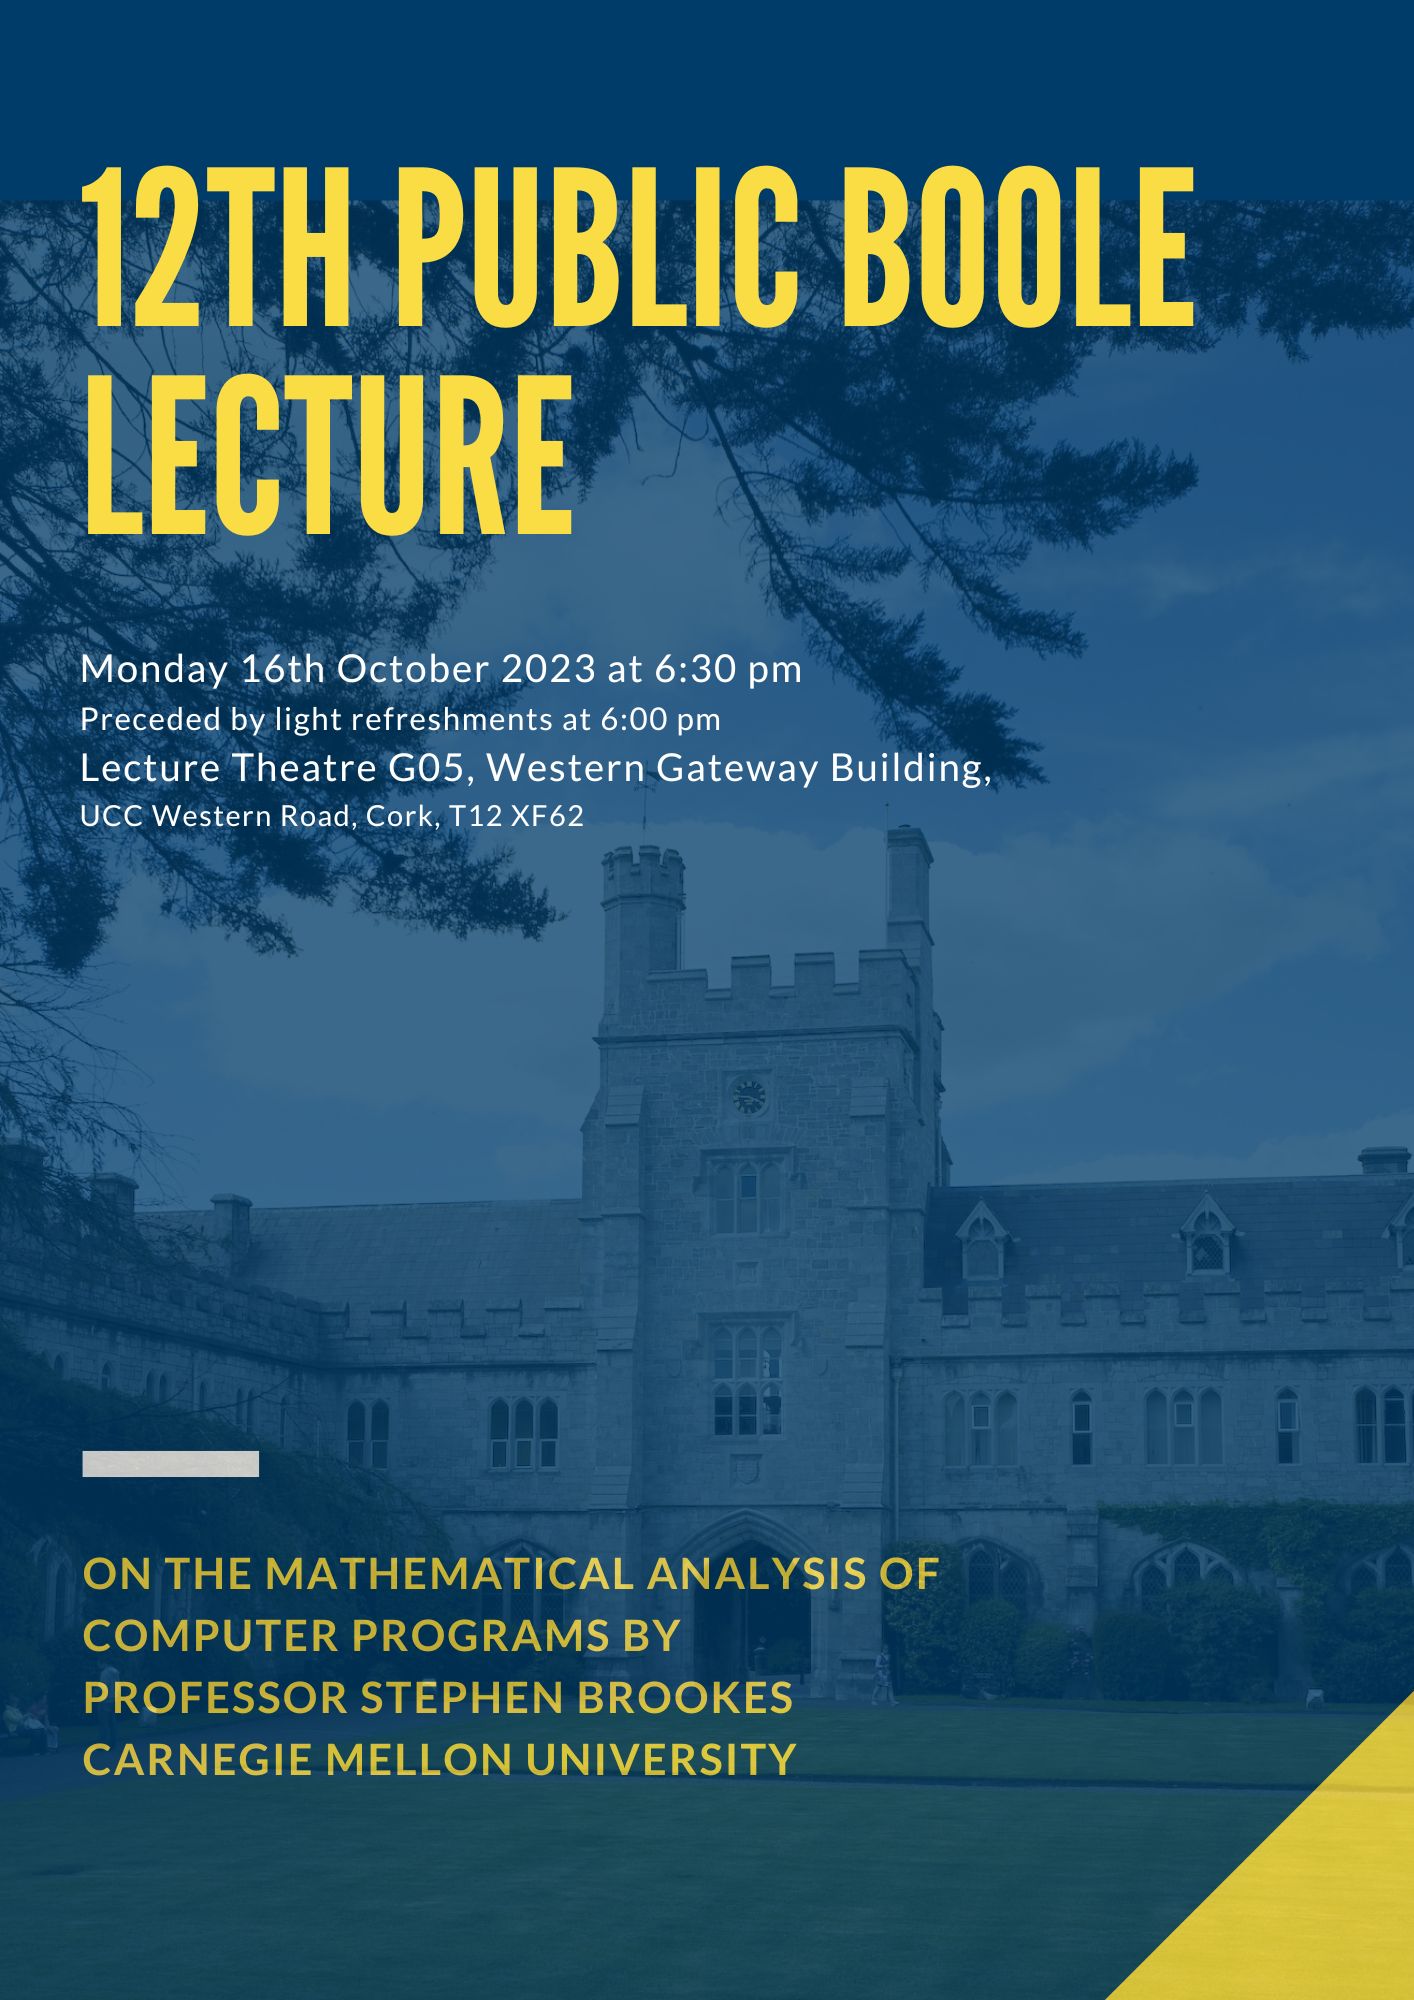 Stephen Brookes Gödel prize recipient will deliver the 12th Annual Public Boole Lecture on  Monday 16th October 18:30 pm